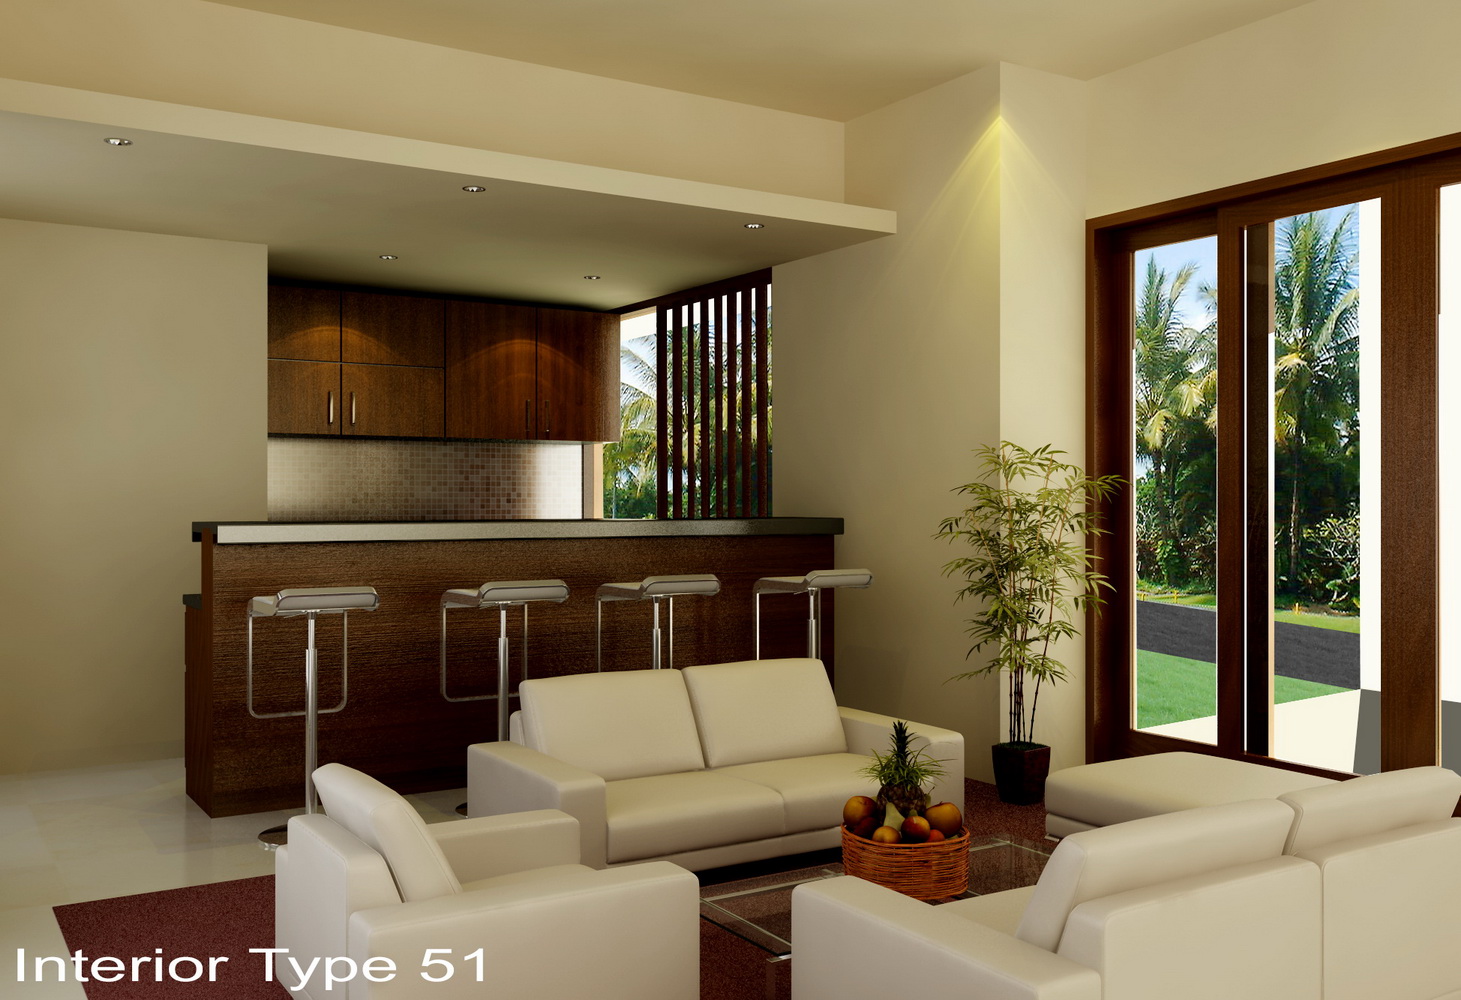 Desain Rumah Minimalis Modern Type 45 2016 Prathama Raghavan